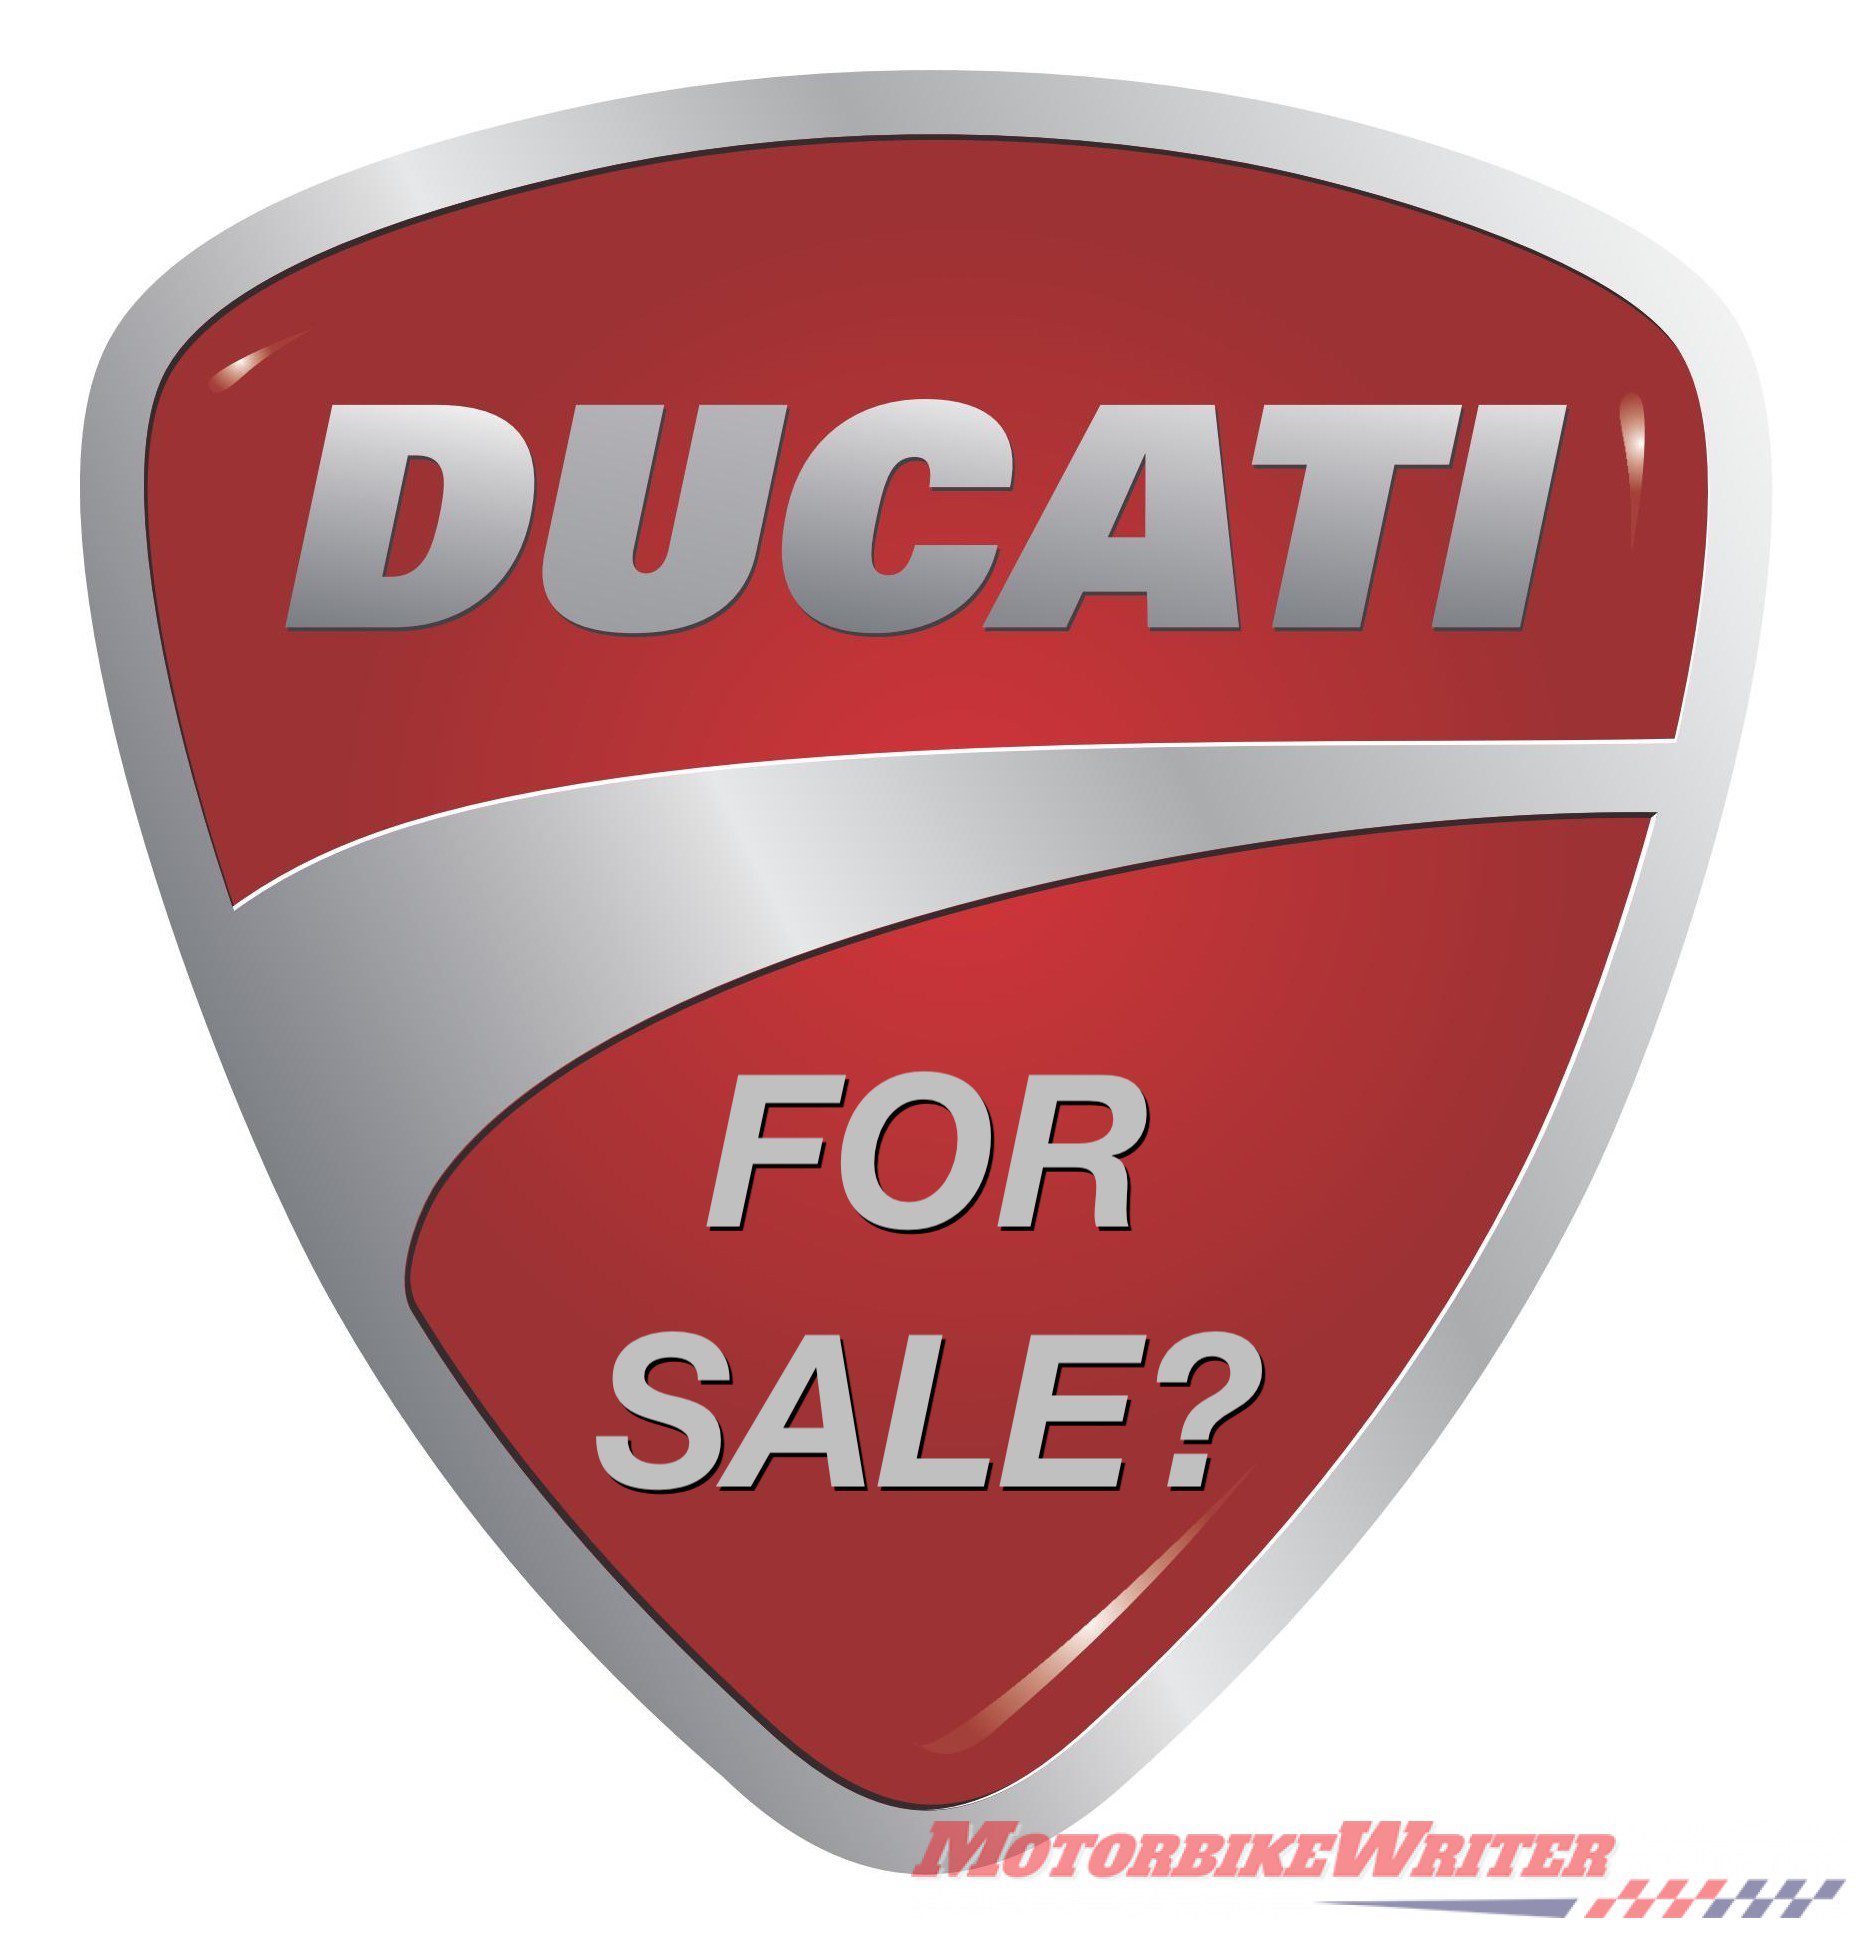 Ducati logo sale interested